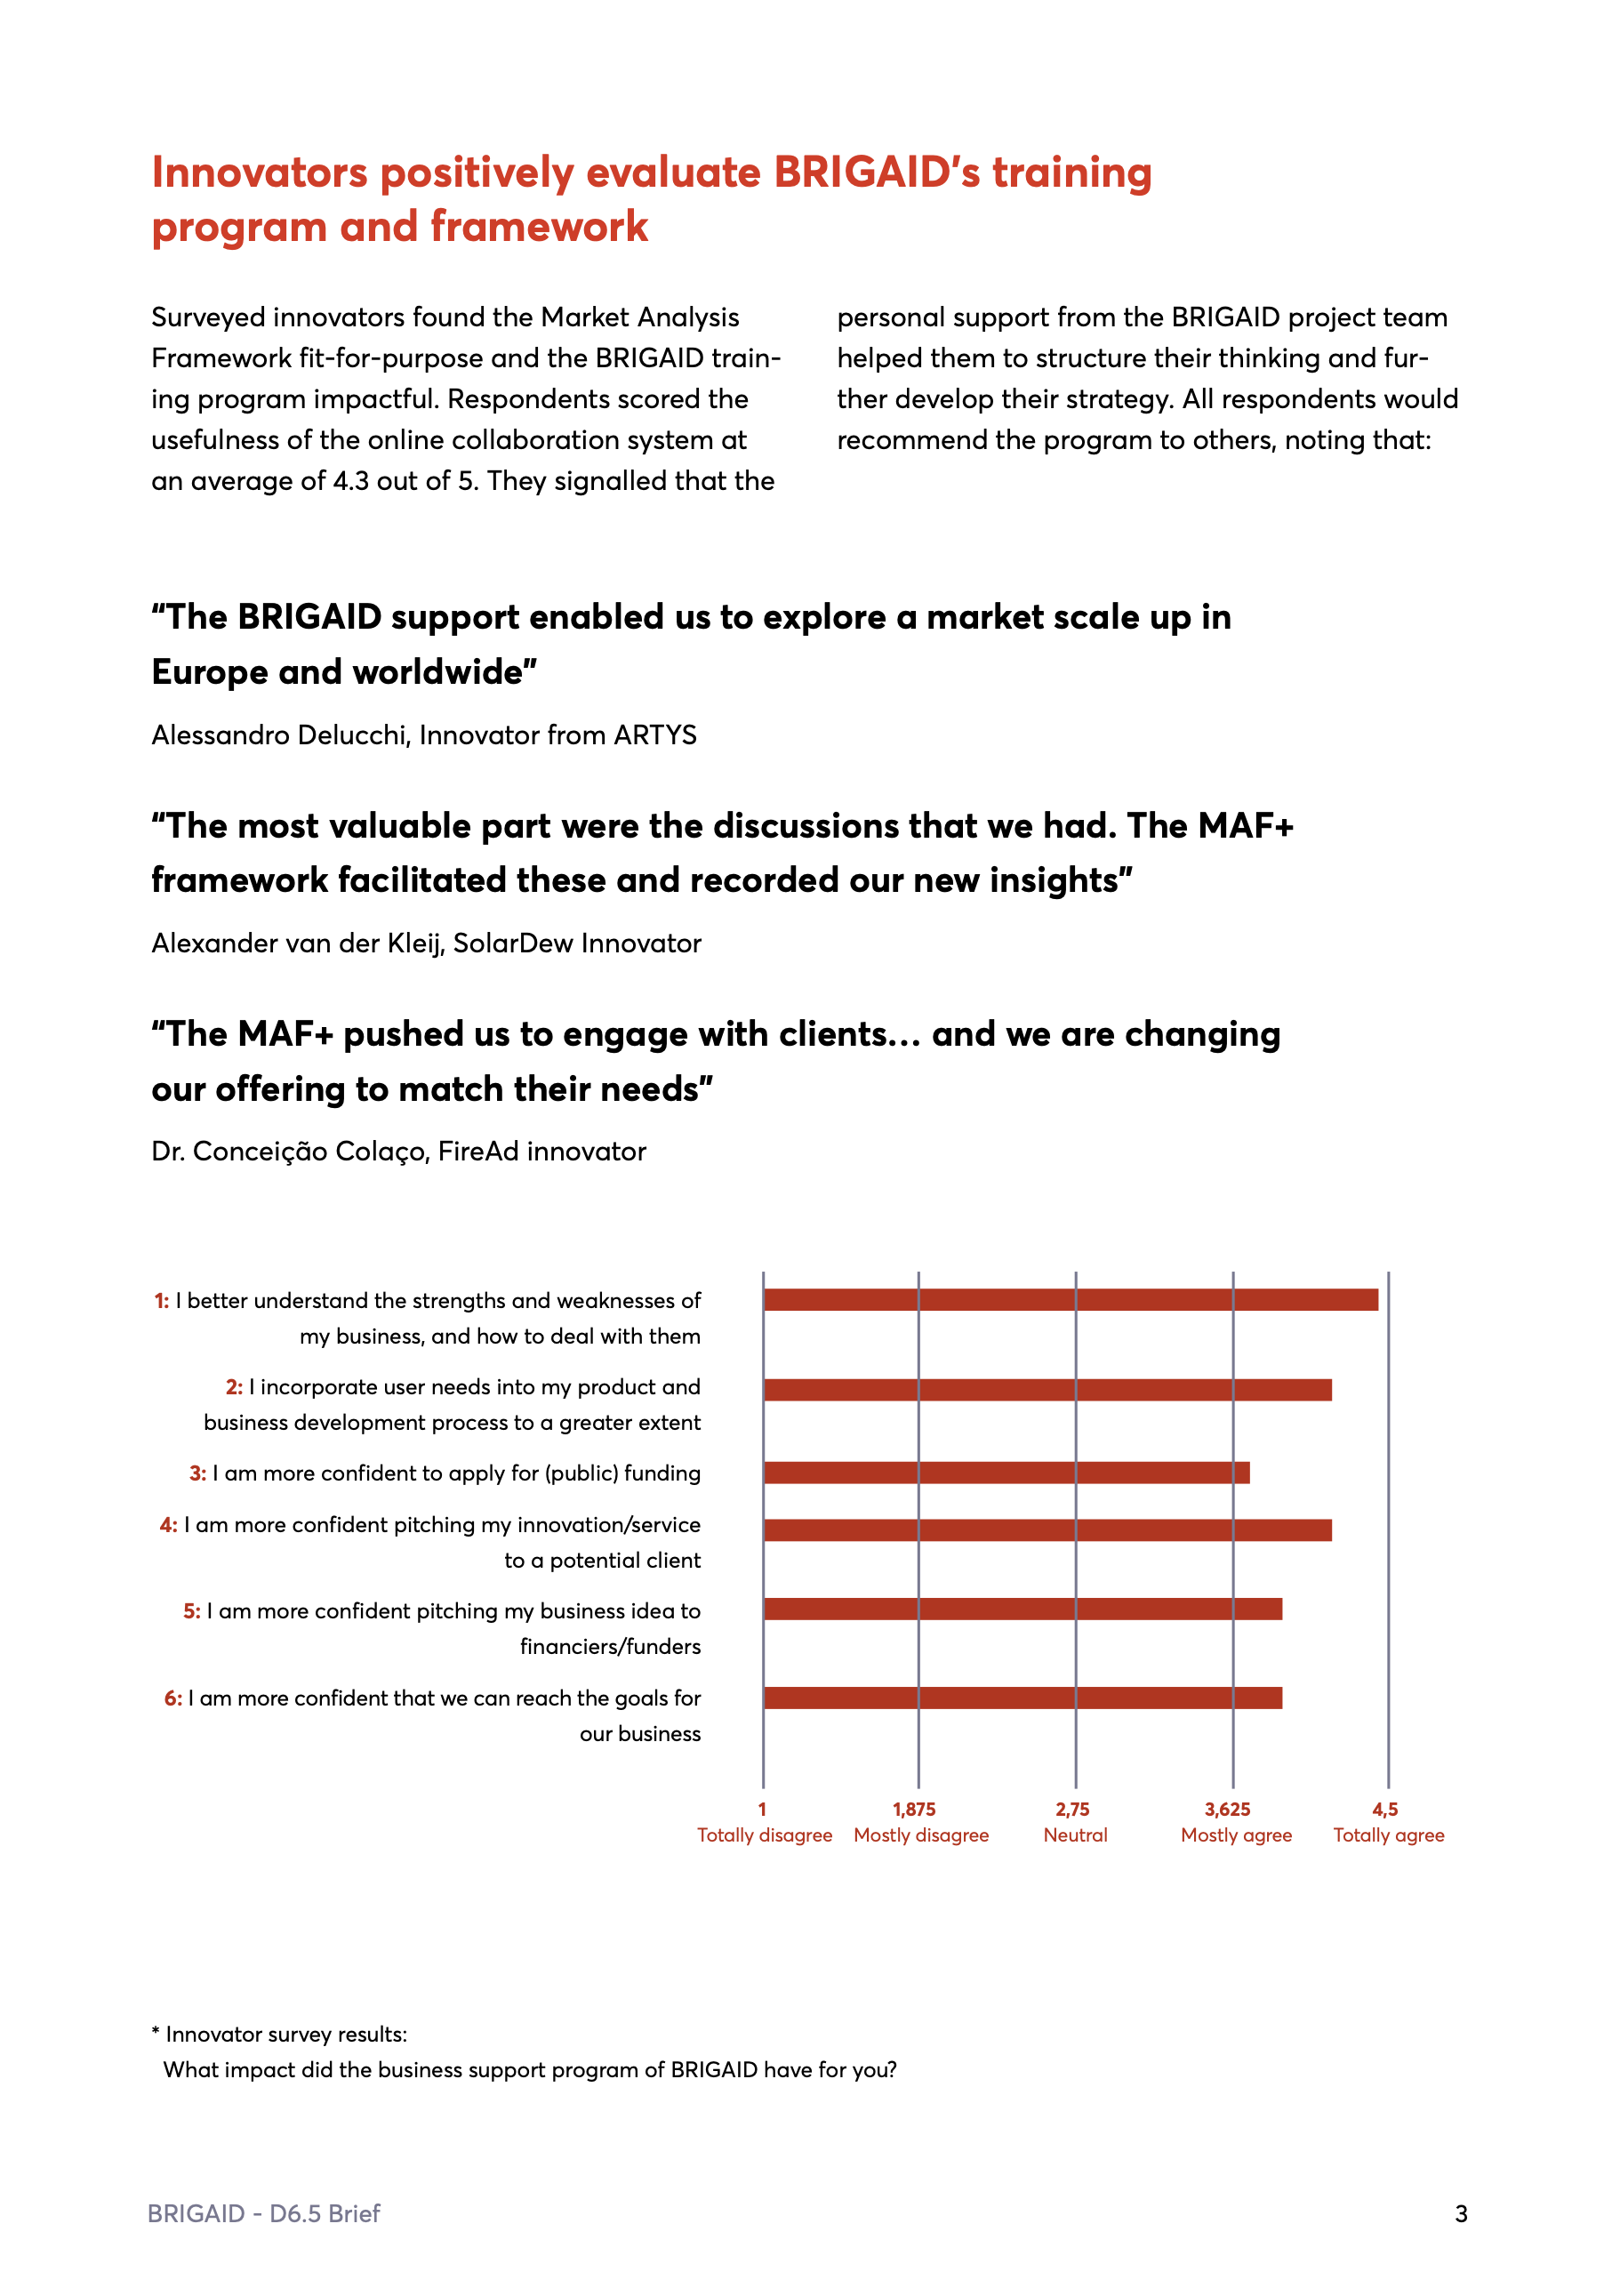 BRIGAID-The Market Analysis Framework (MAF+)-2